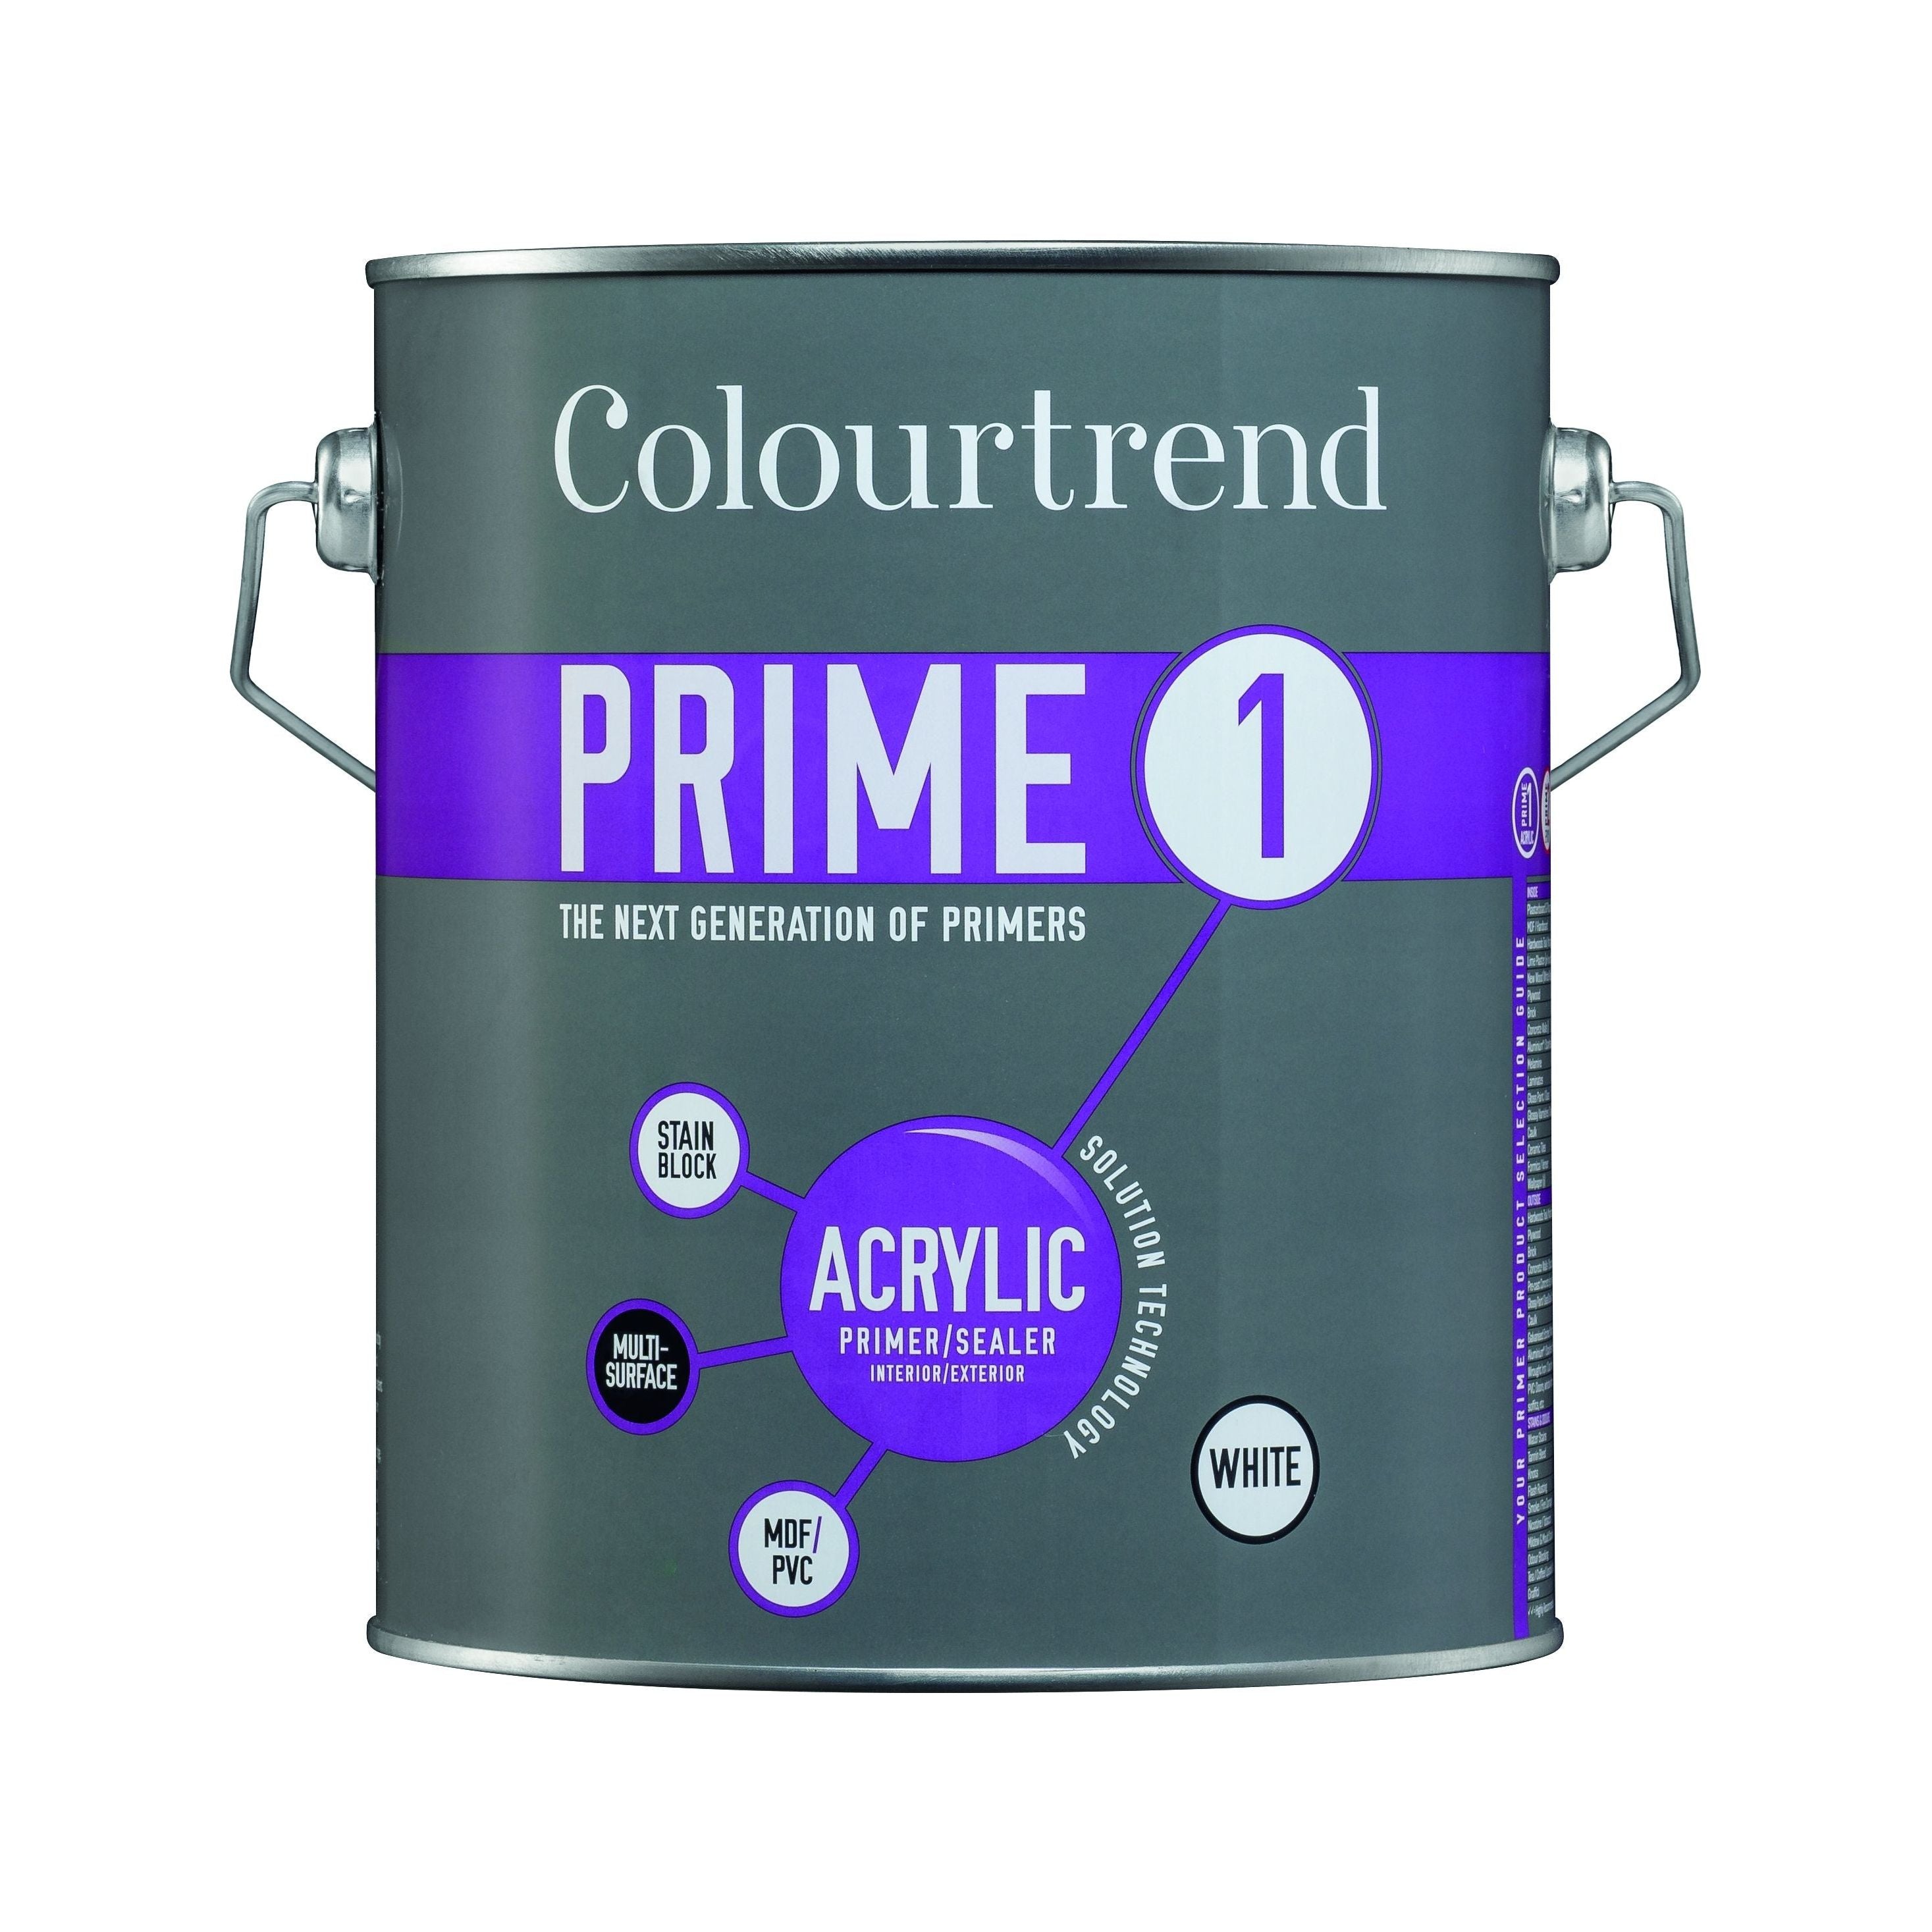 Colourtrend Prime 1 Acrylic Primer Sealer